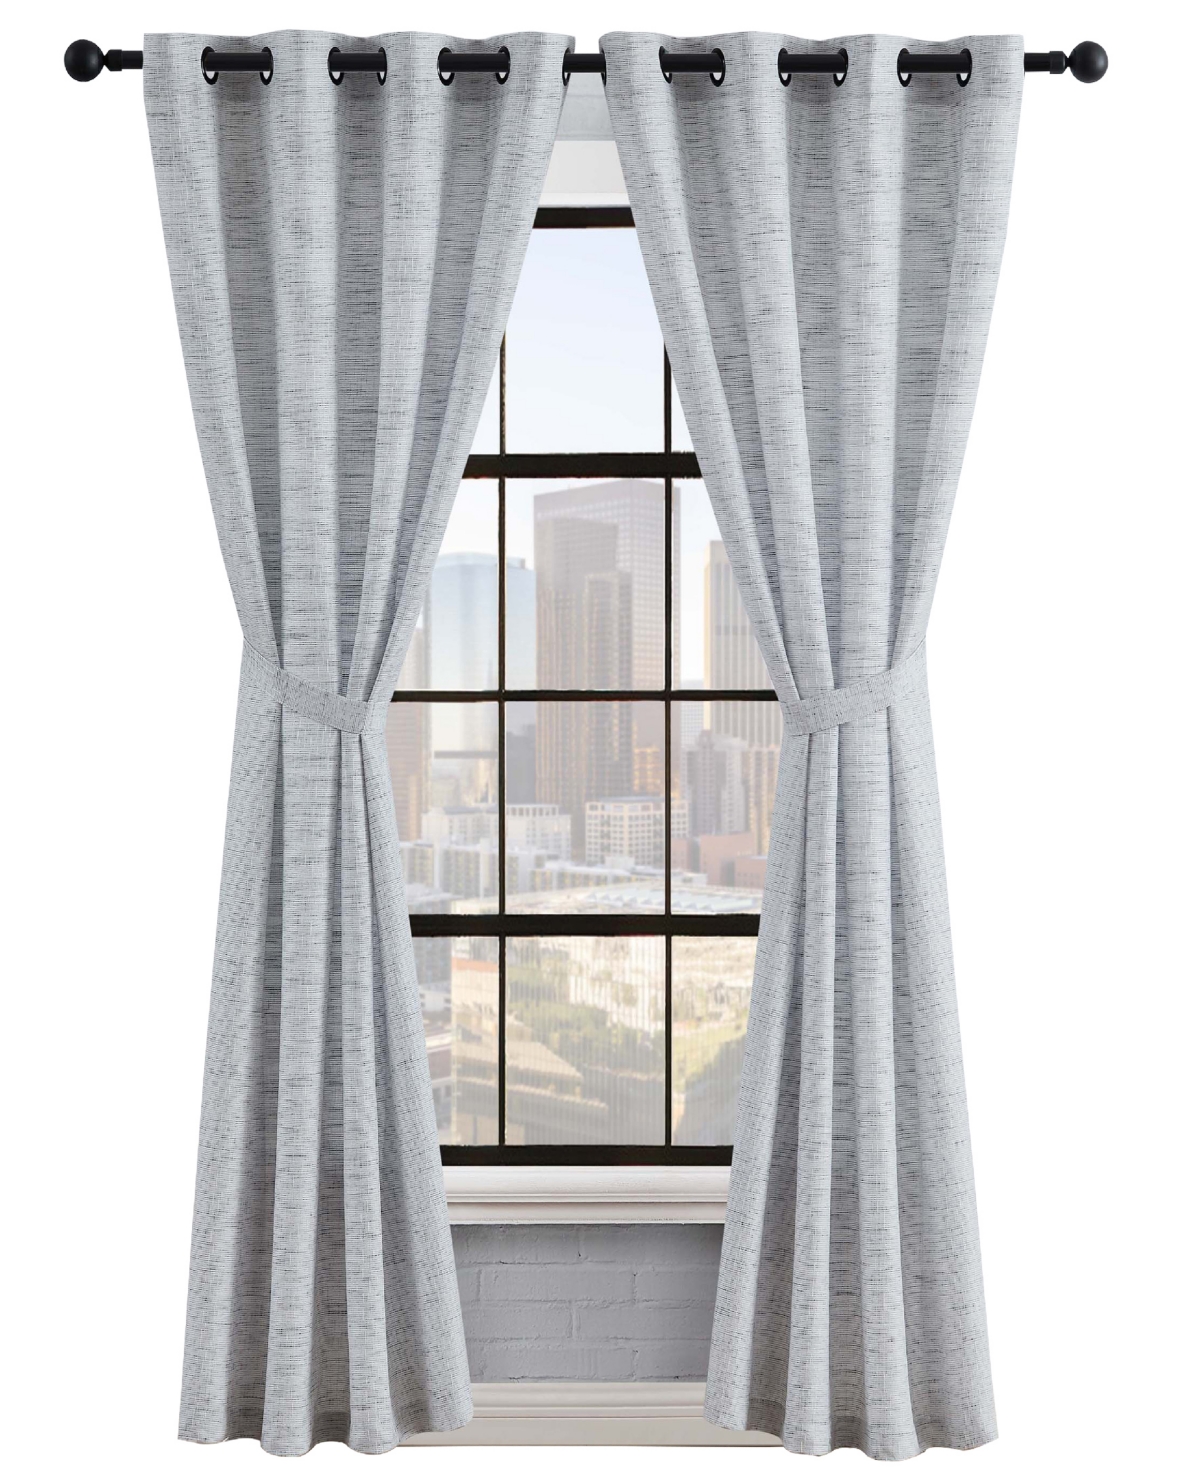 Lucky Brand Sierra Textured Light Filtering Grommet Window Curtain Panel Pair With Tiebacks, 52" X 96" In Denim